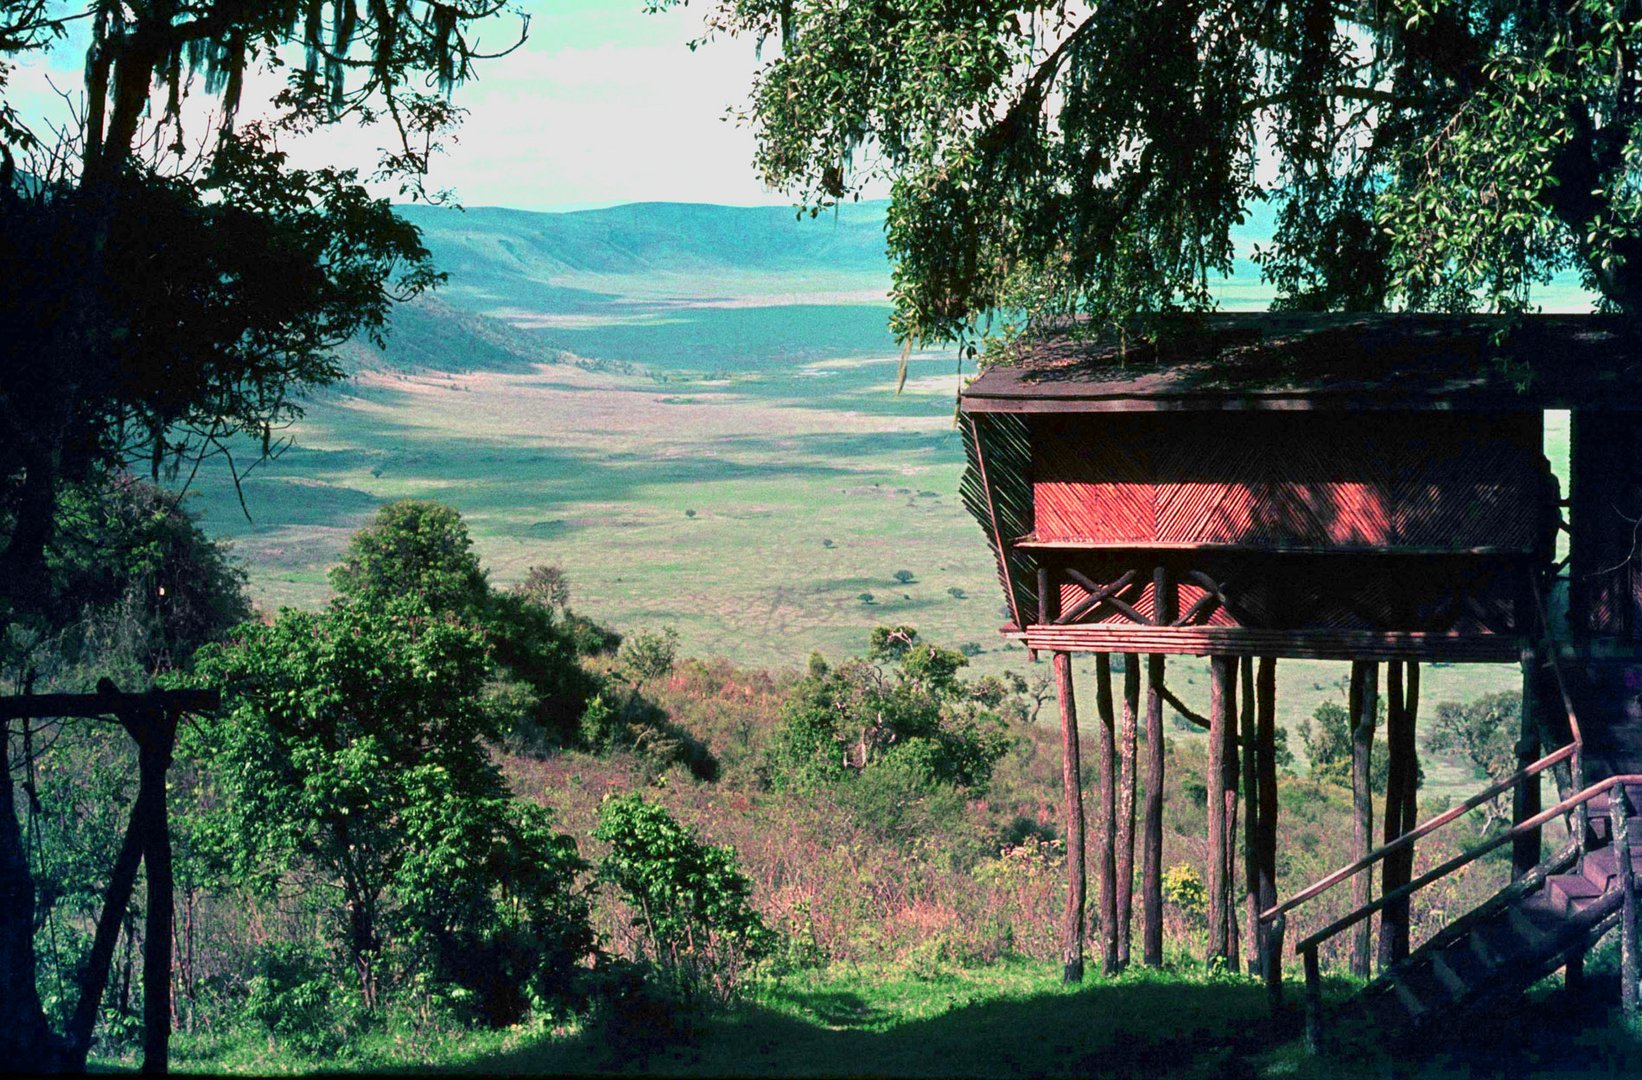 1975 bestand die alte Lodge aus Holz am Ngorongoro-Krater